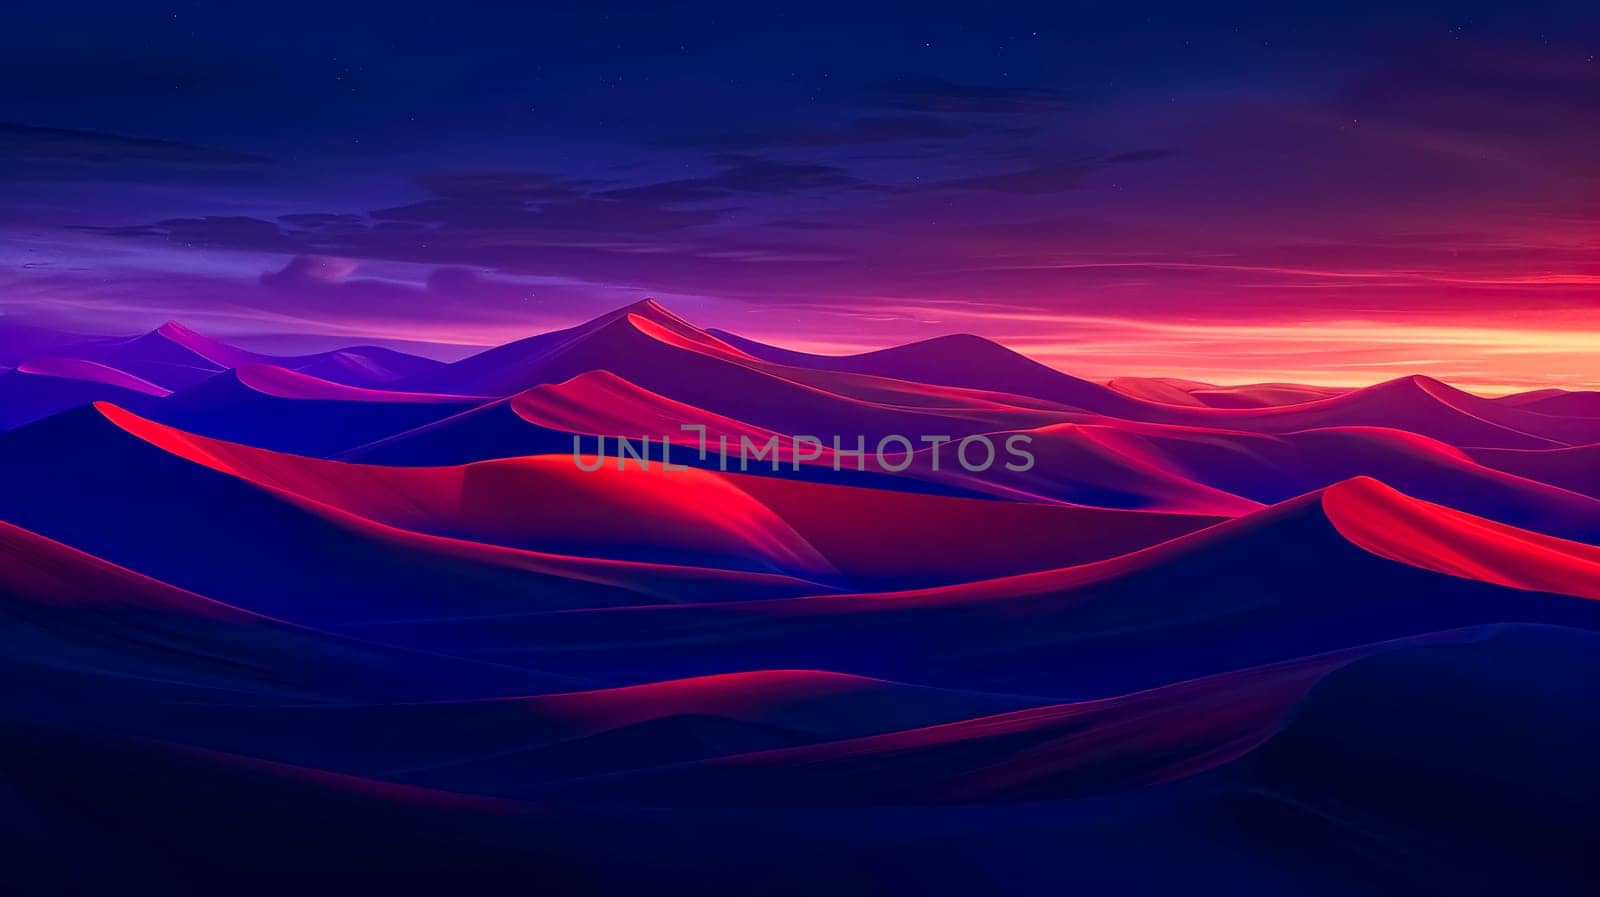 Digital art of serene desert dunes under a vivid twilight sky by Edophoto